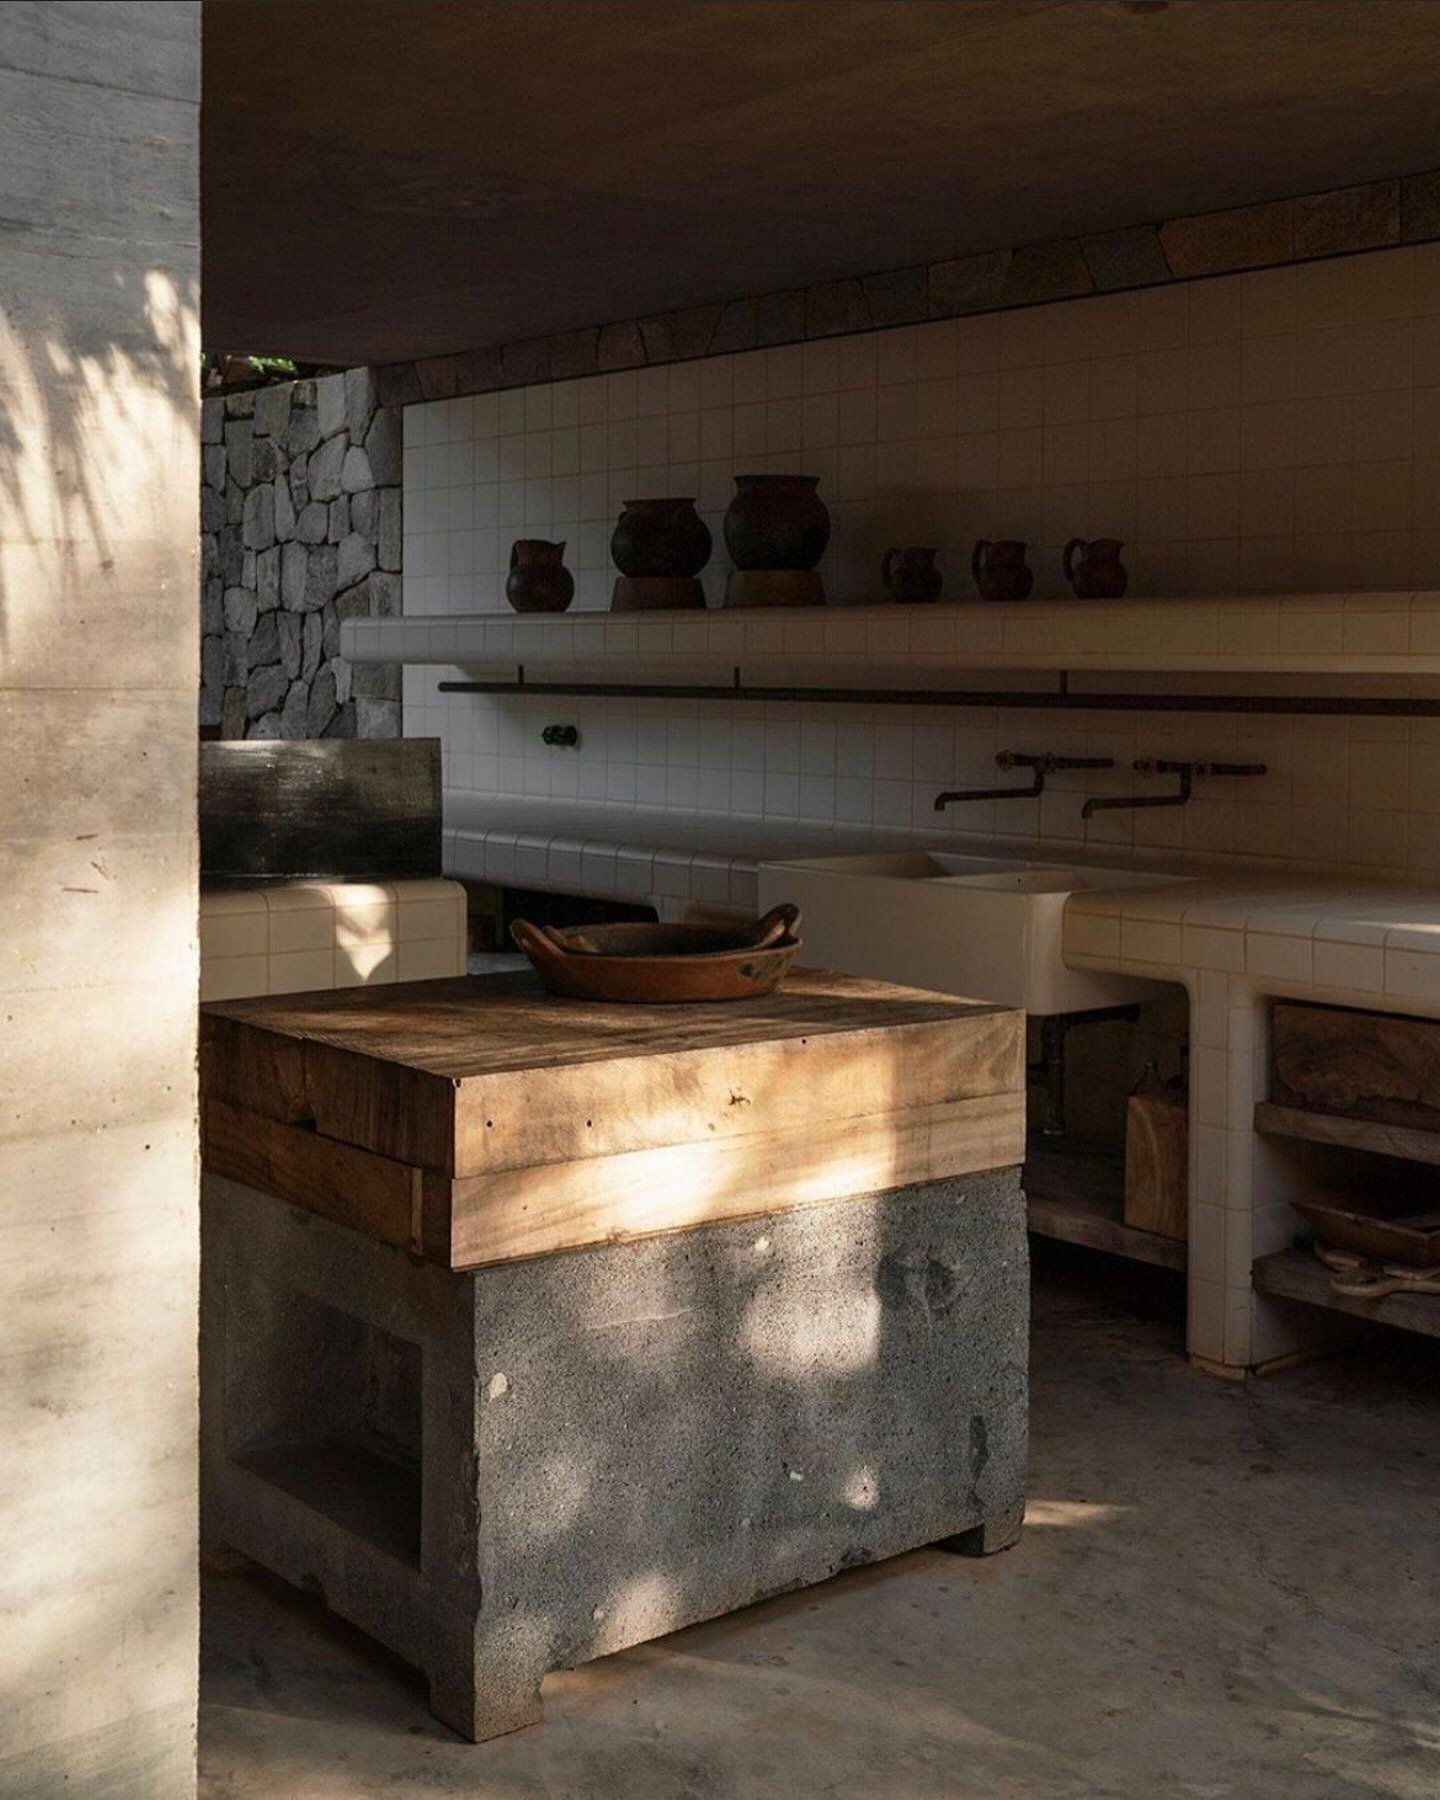 Oaxacan kitchen by @taller_mauricio_rocha, styled by @s__g__l, photo by @fabianml ❣︎
&bull;
&bull;
&bull;
#architecturaldigest #architecturalporn #calminghomes #dailyinspiration #designinspo #houseoftheday #moderndesign #neutralhomes #neutraltones #r